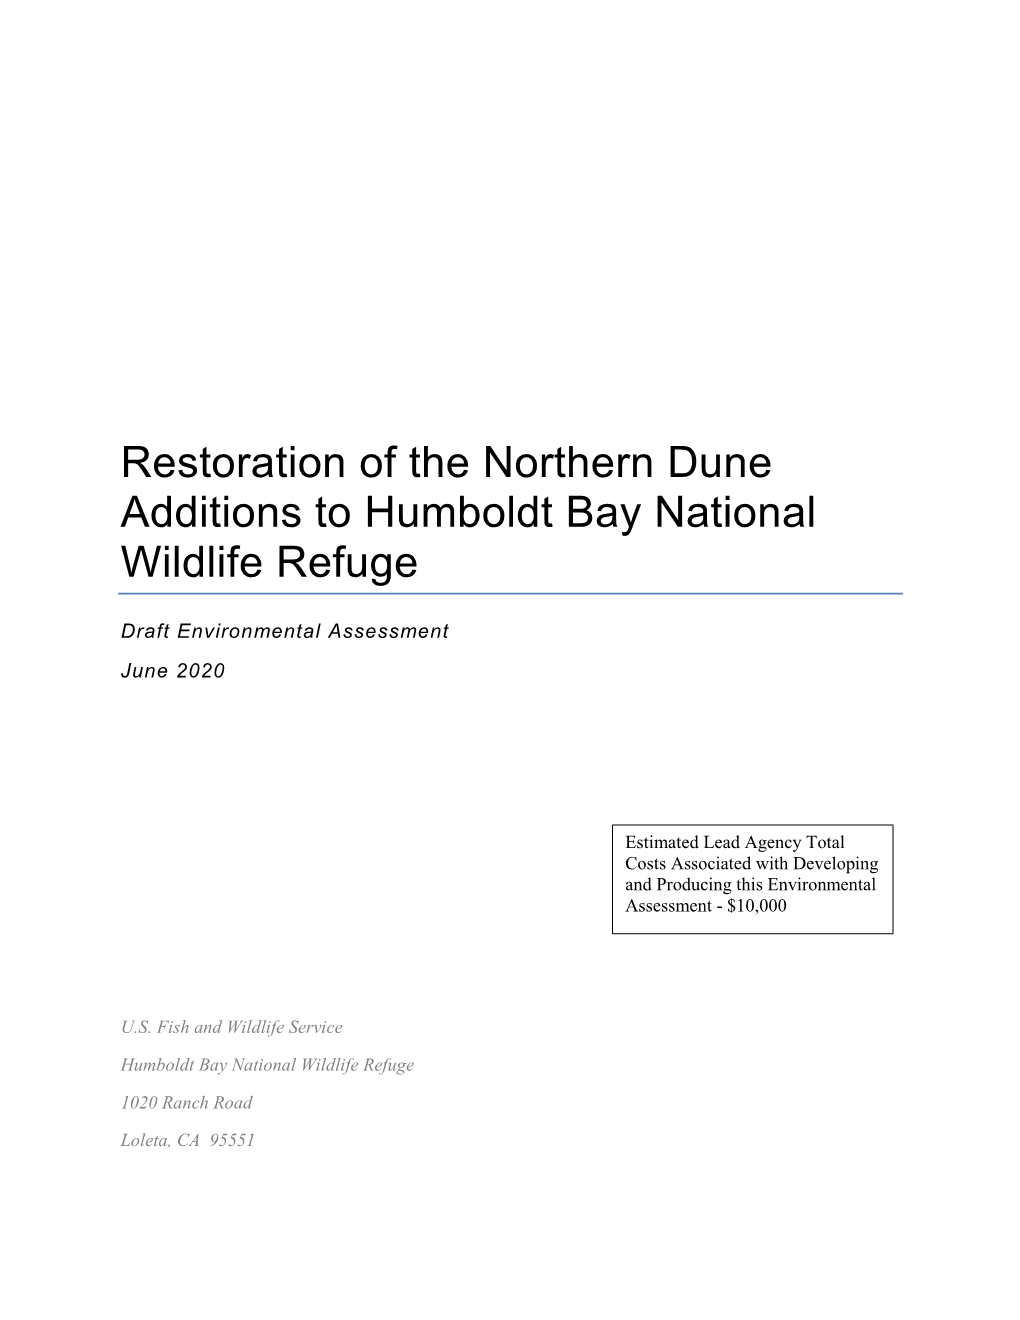 Restoration of the Northern Dune Additions to Humboldt Bay National Wildlife Refuge